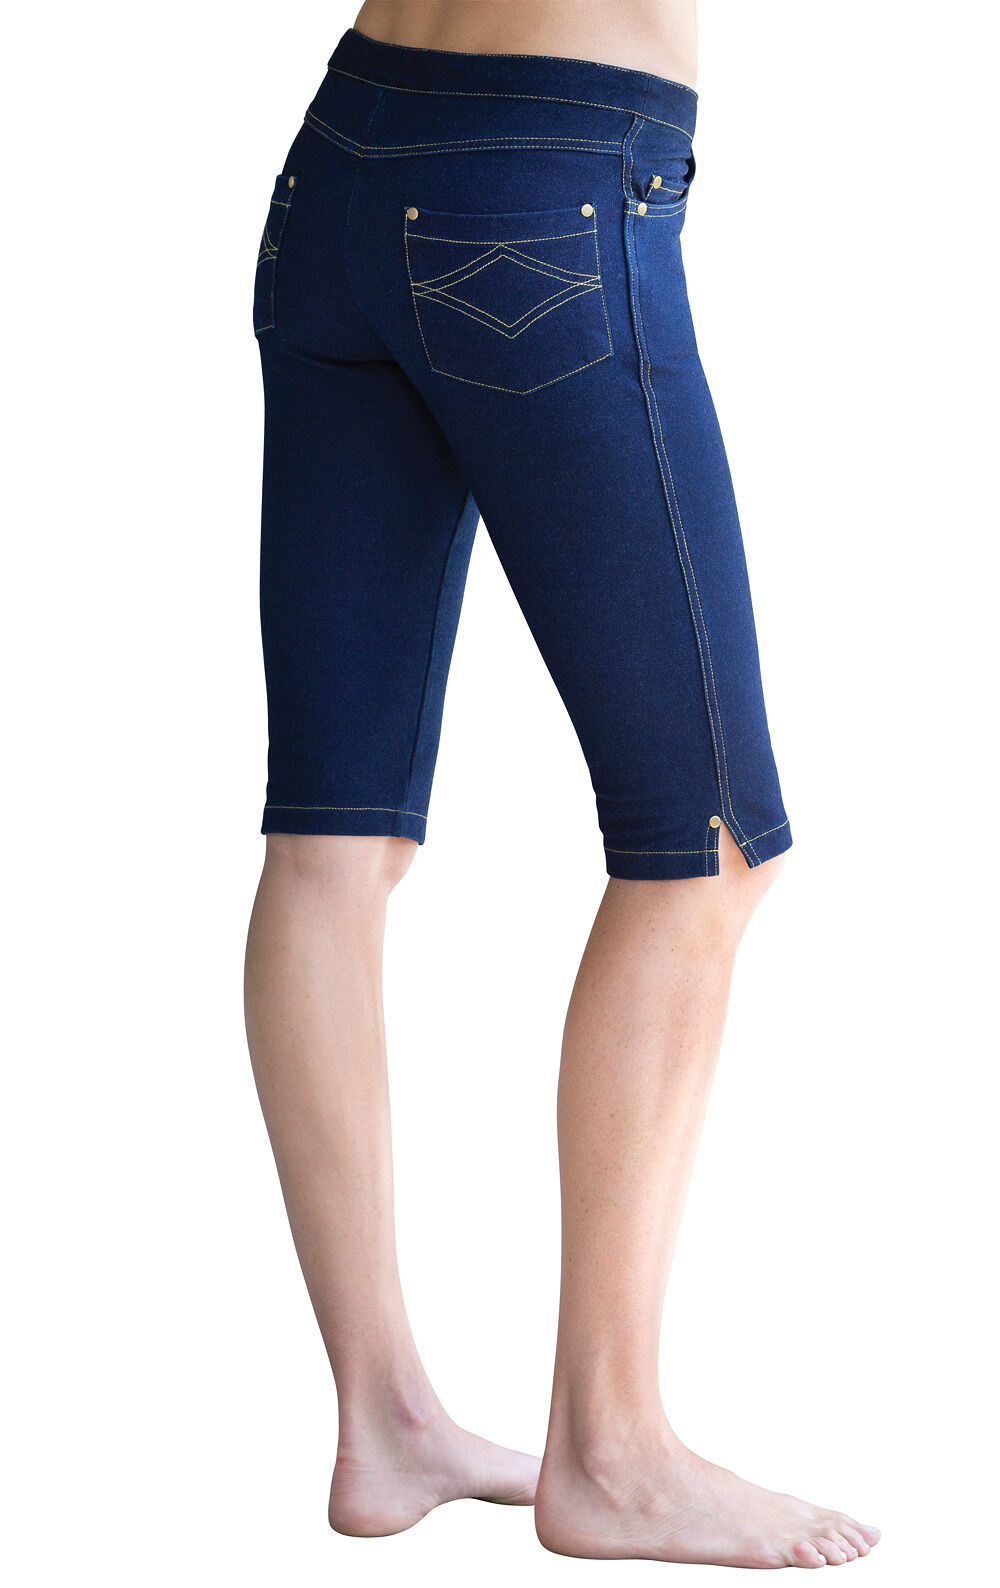 PajamaJeans Bermuda Shorts for Women Stretch Denim Capri Jeggings 